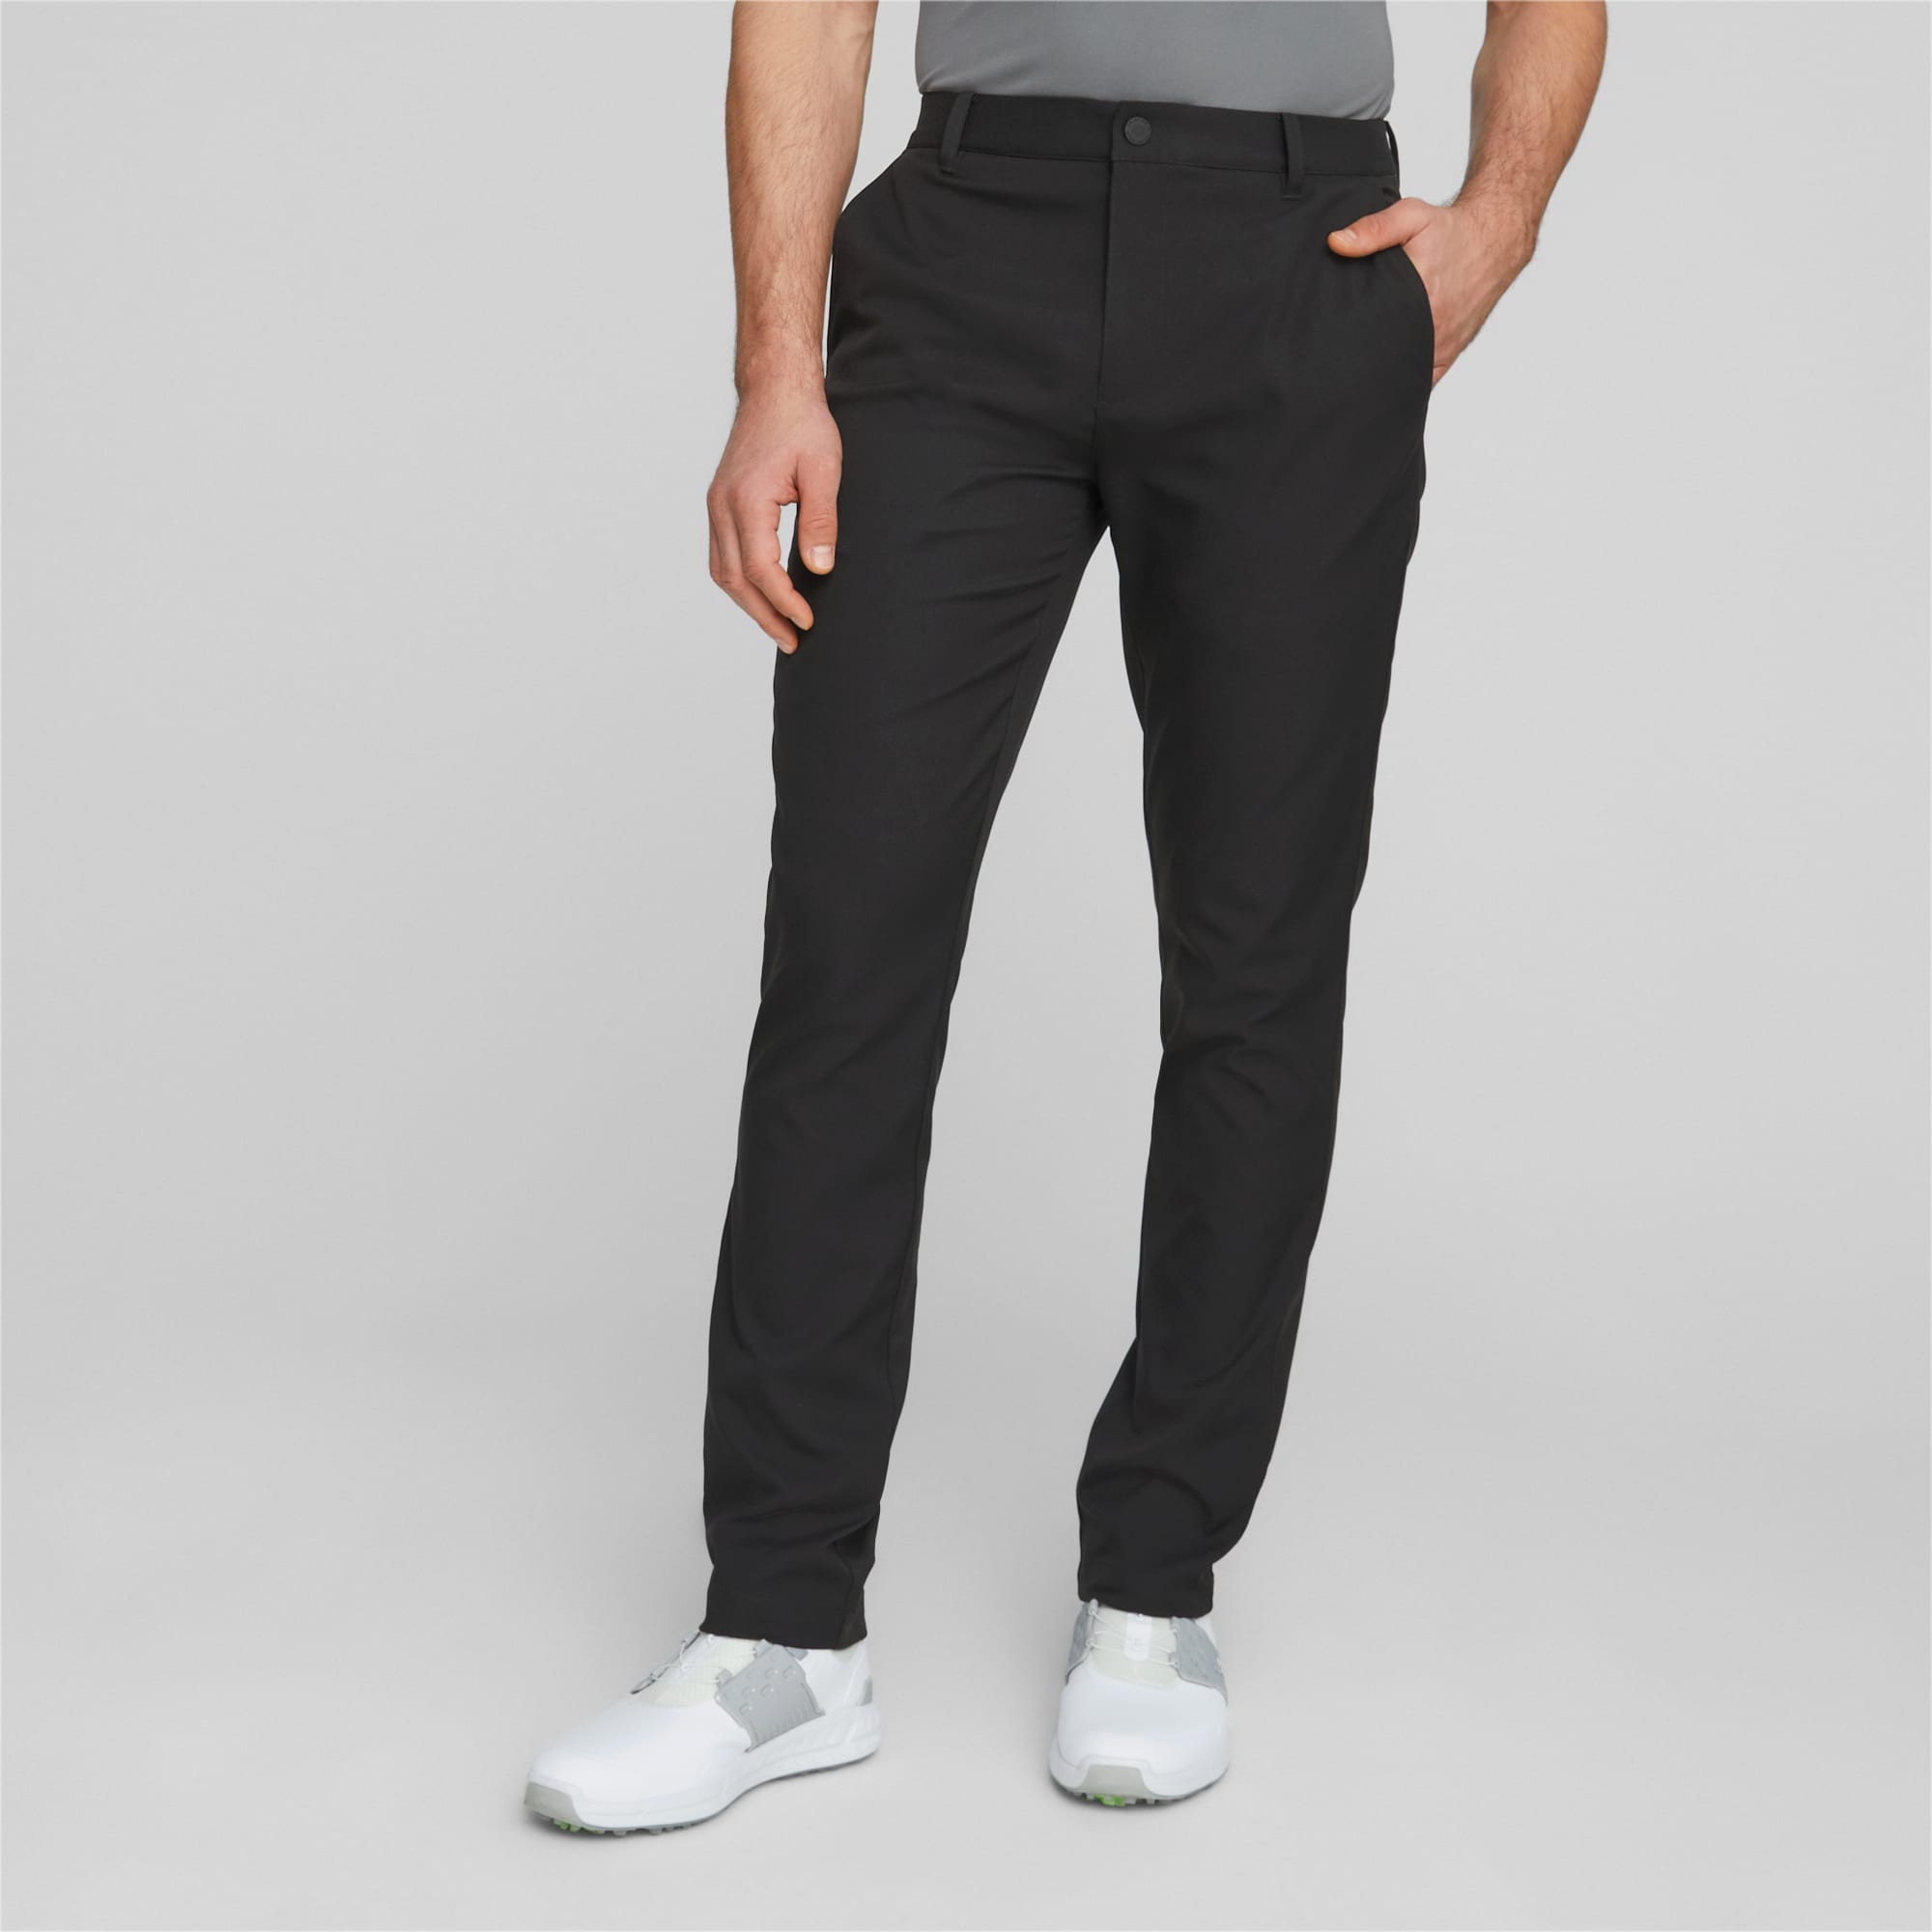 PUMA Dealer Tailored Golf Pants Men, Black, Size 32/34, Clothing